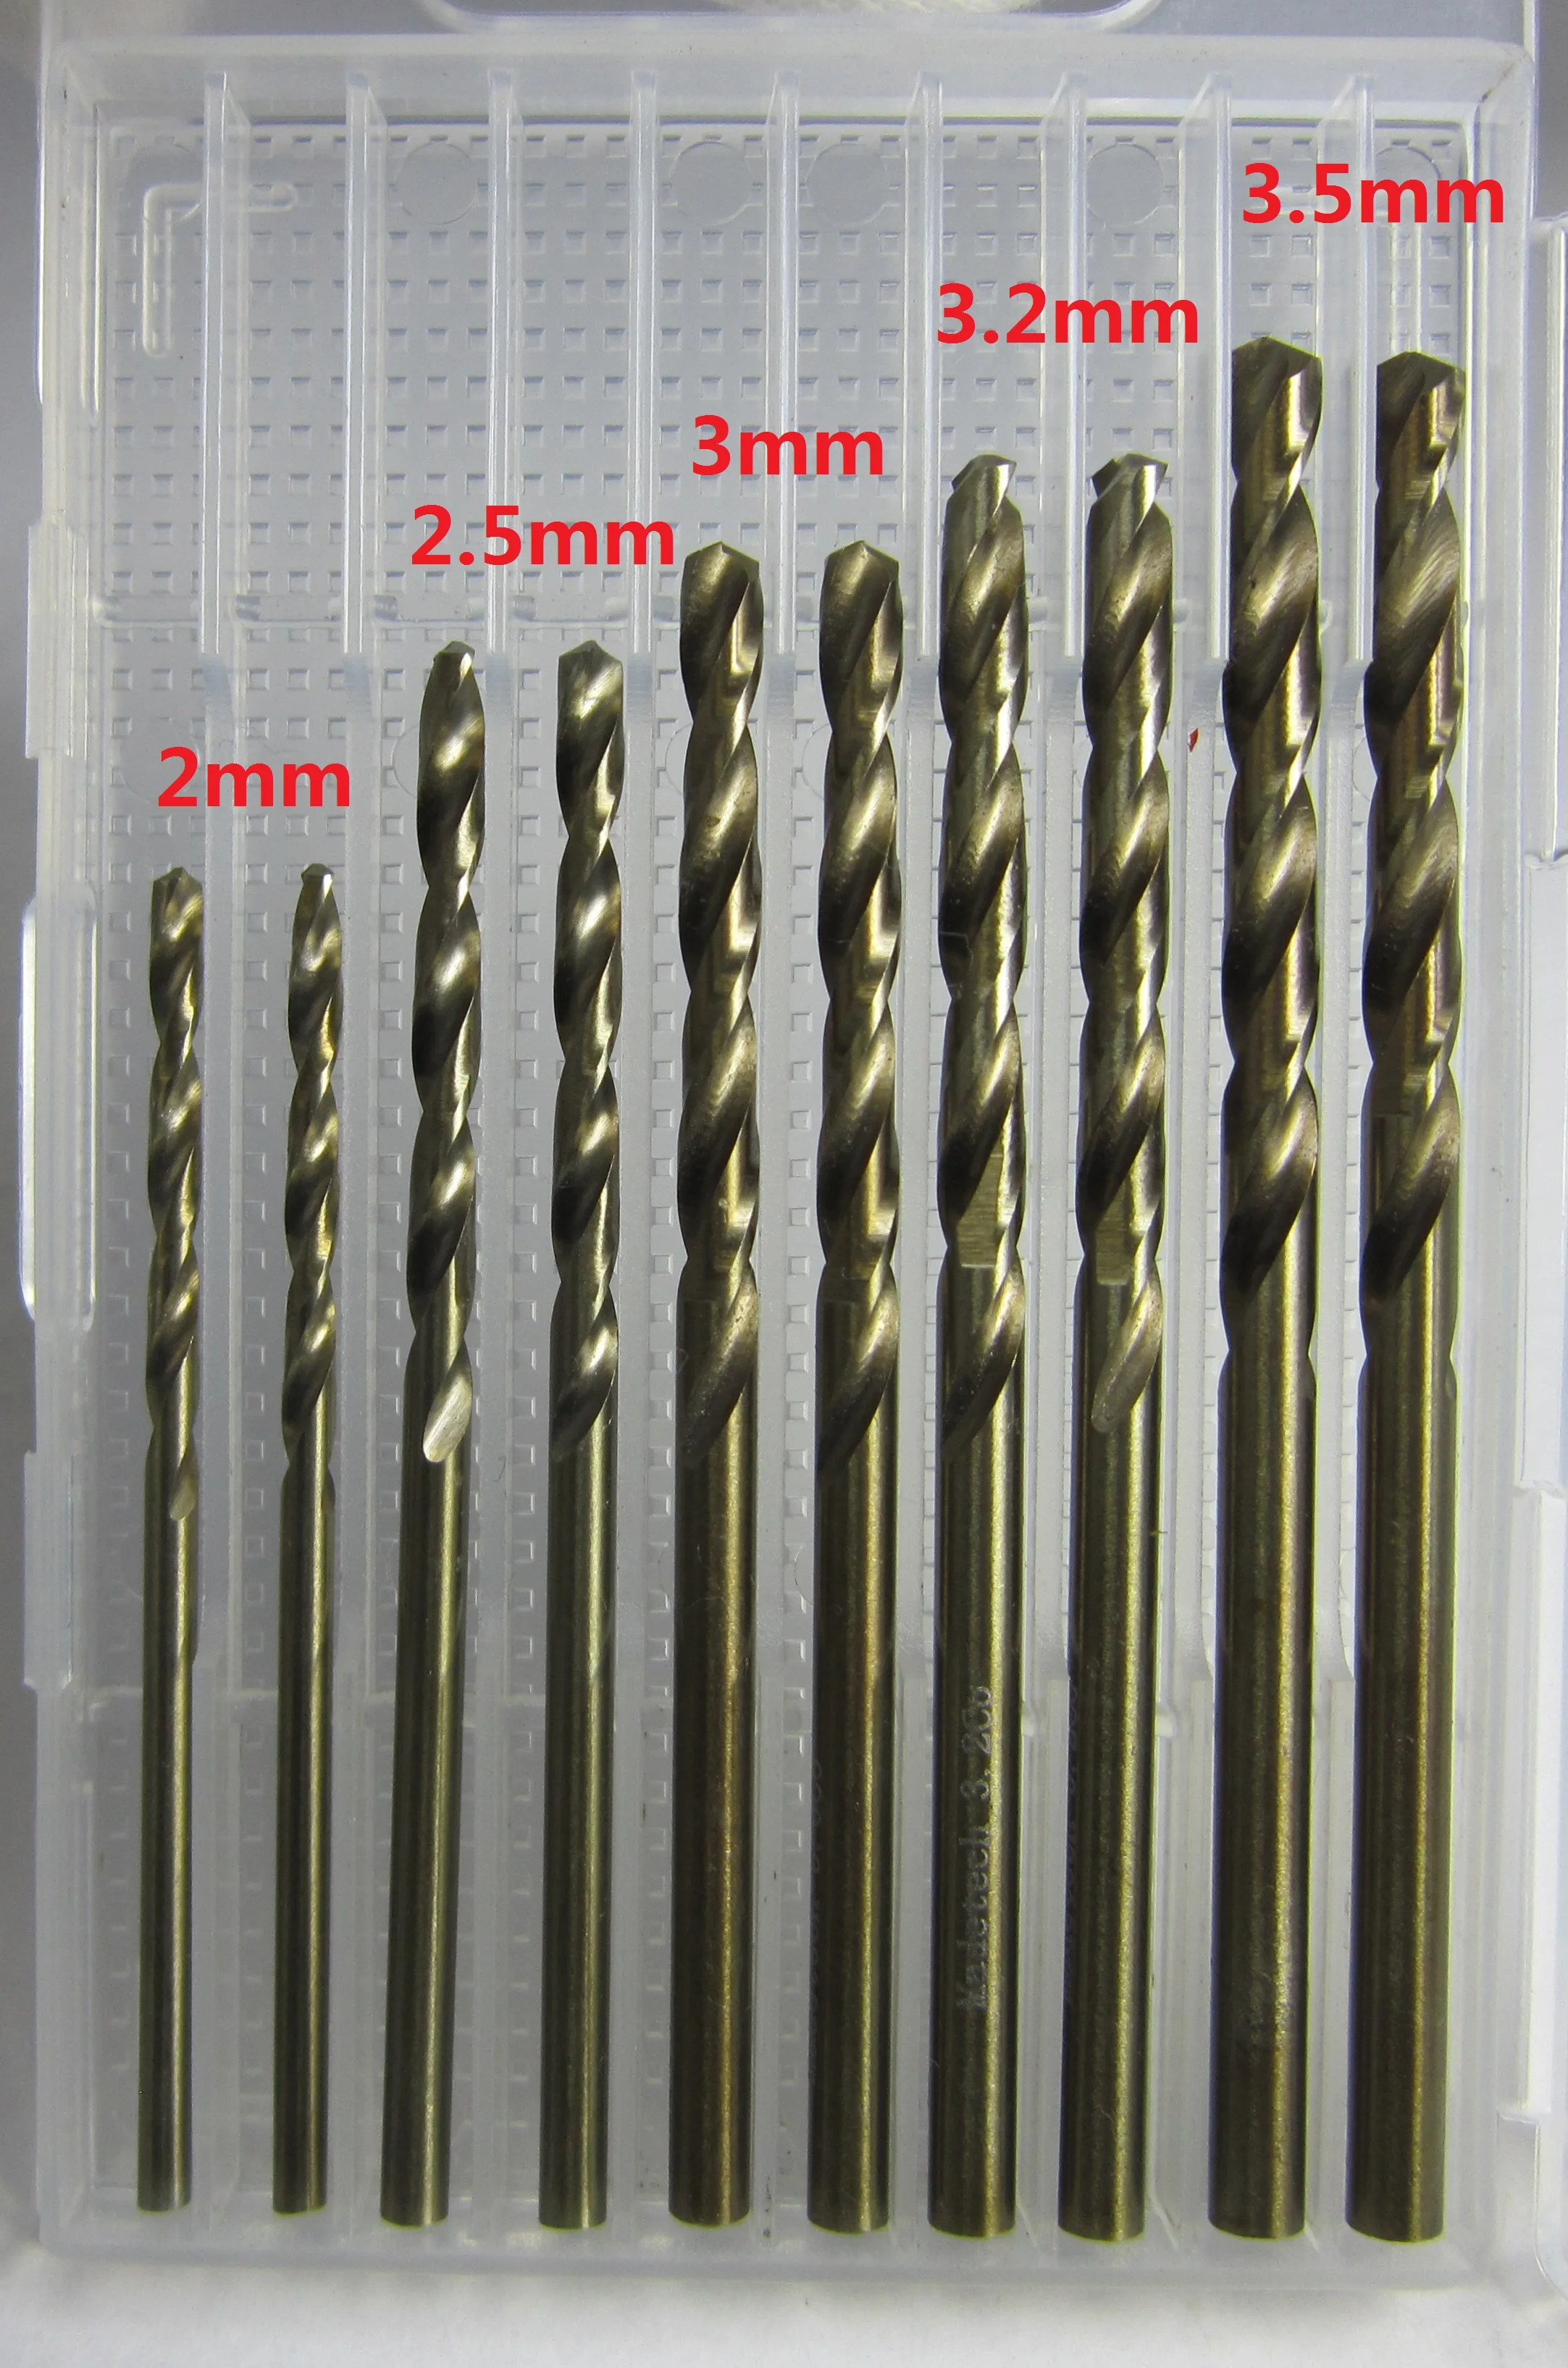 Cobalt Tap Punch Tool Wear Resistance for Machine High Speed Steel Bit 